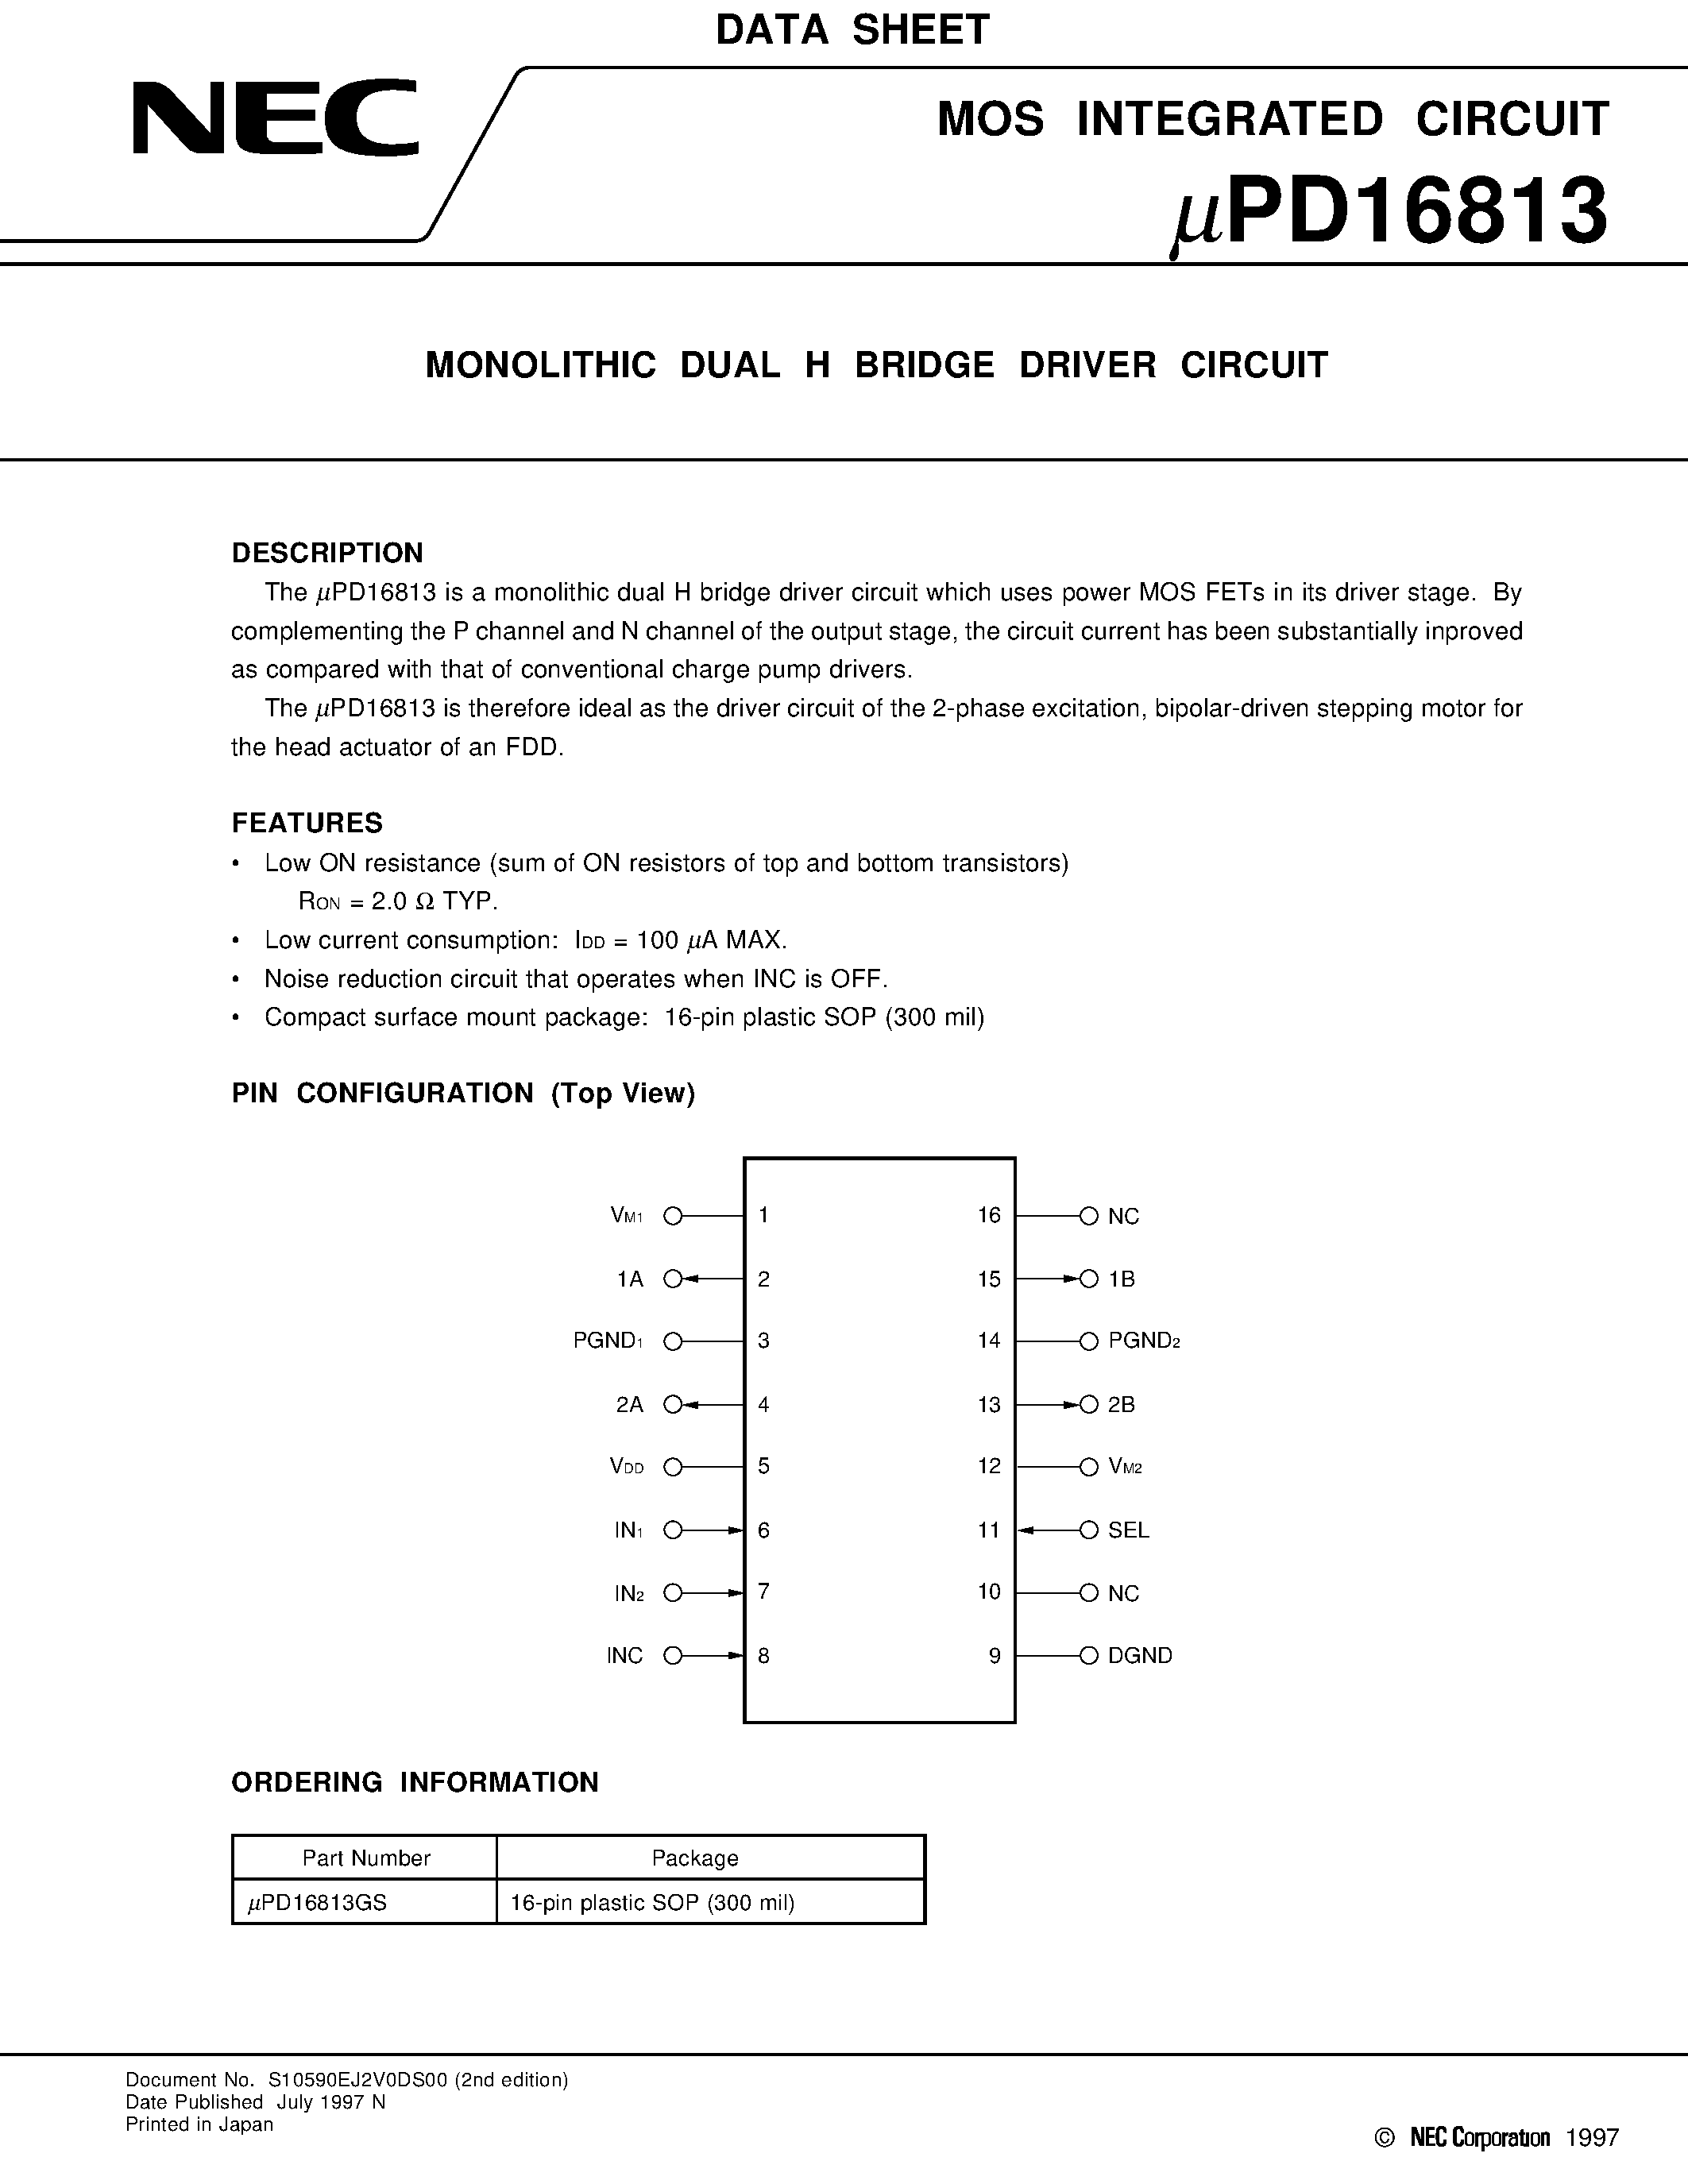 Даташит UPD16813 - MONOLITHIC DUAL H BRIDGE DRIVER CIRCUIT страница 1